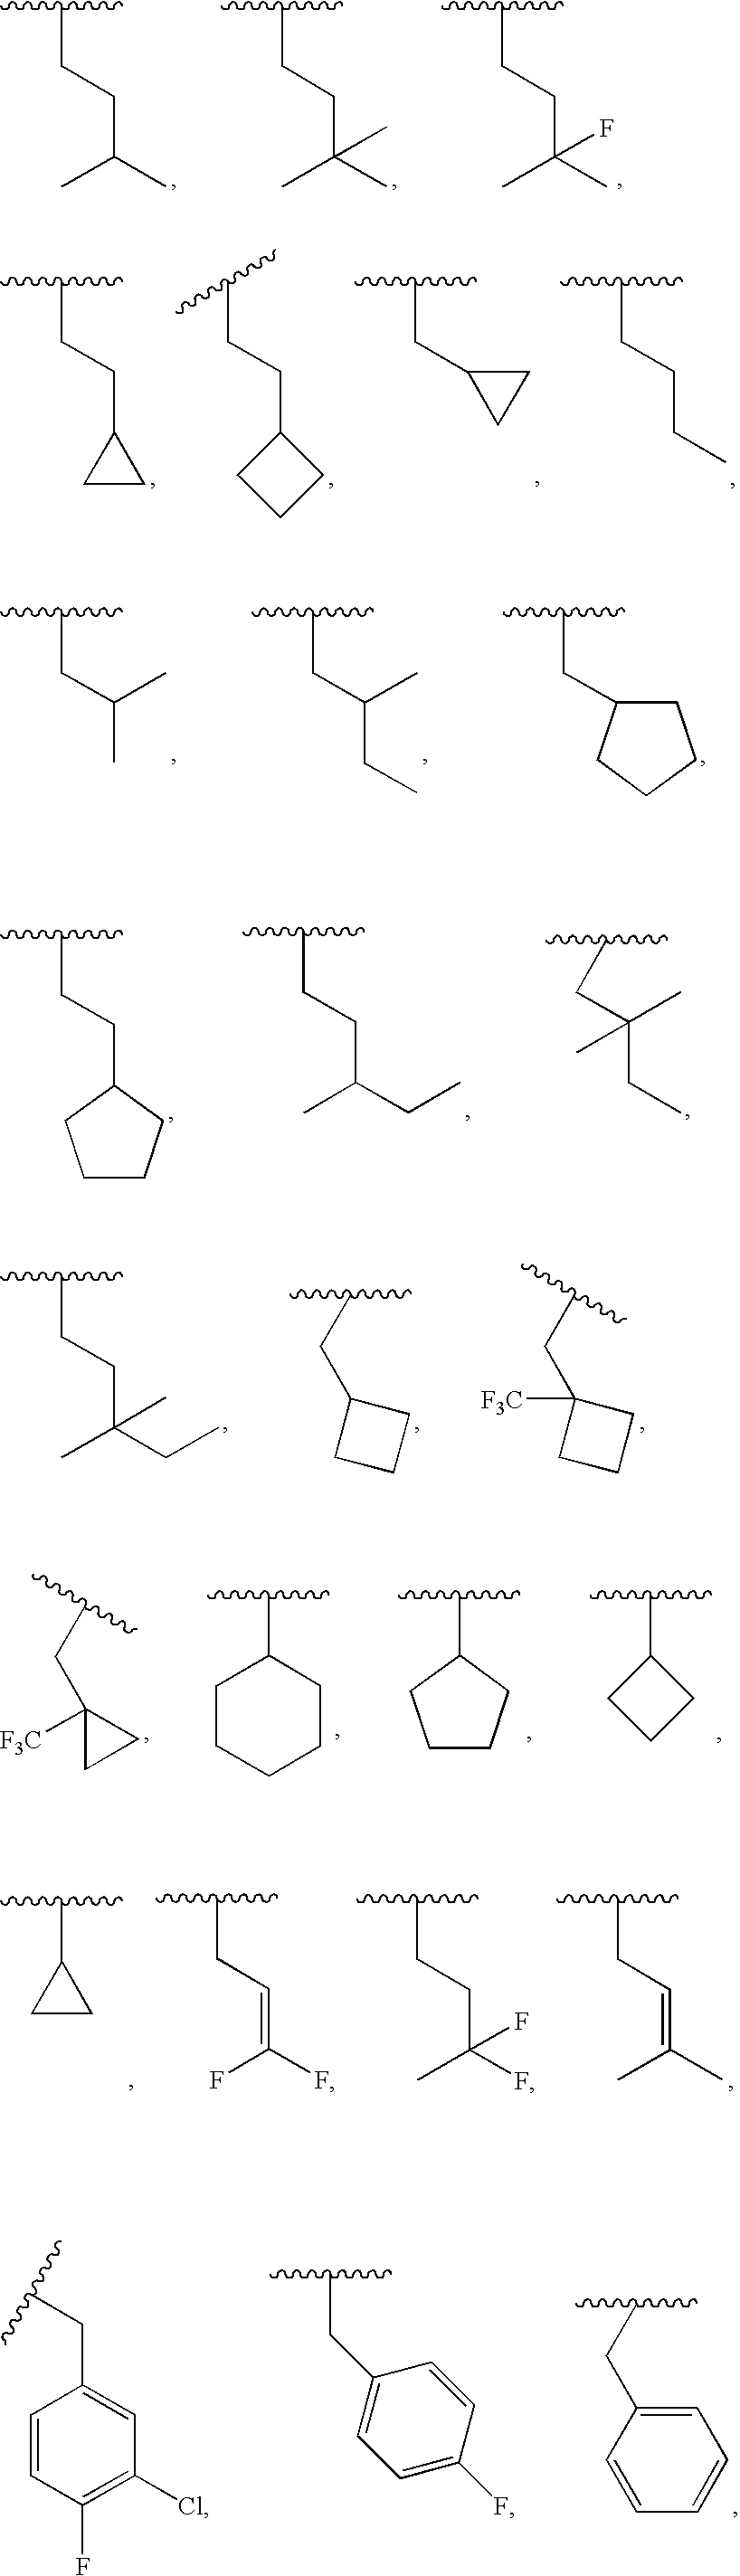 1-methyl-benzo[1,2,4]thiadiazine 1-oxide derivatives